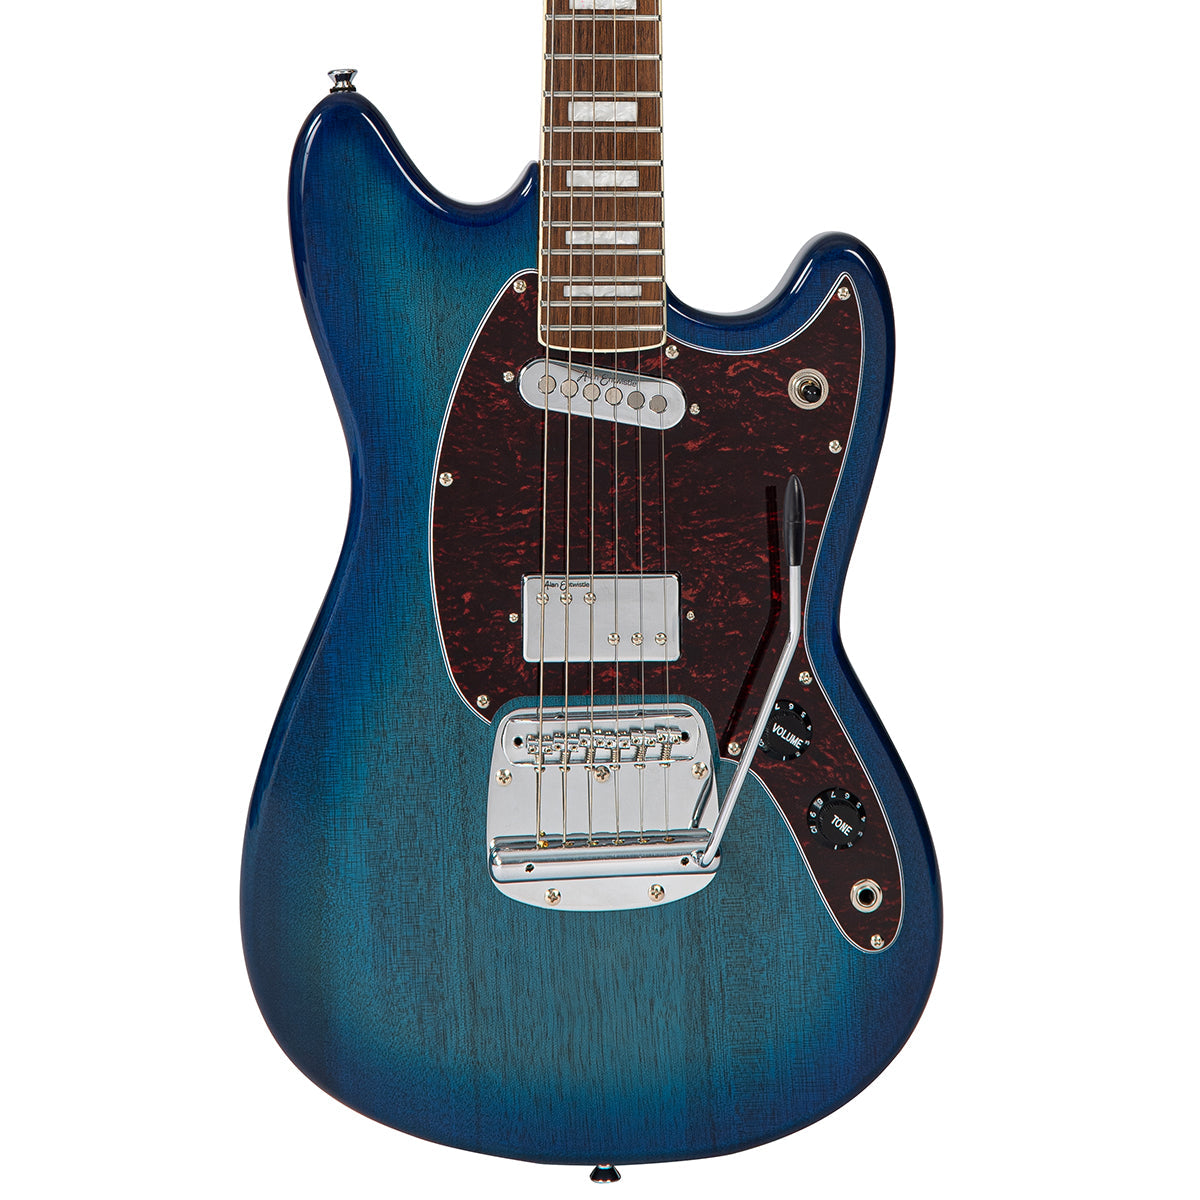 Vintage REVO Series 'Colt' HS Duo Electric Guitar ~ Blueburst, Electric Guitars for sale at Richards Guitars.